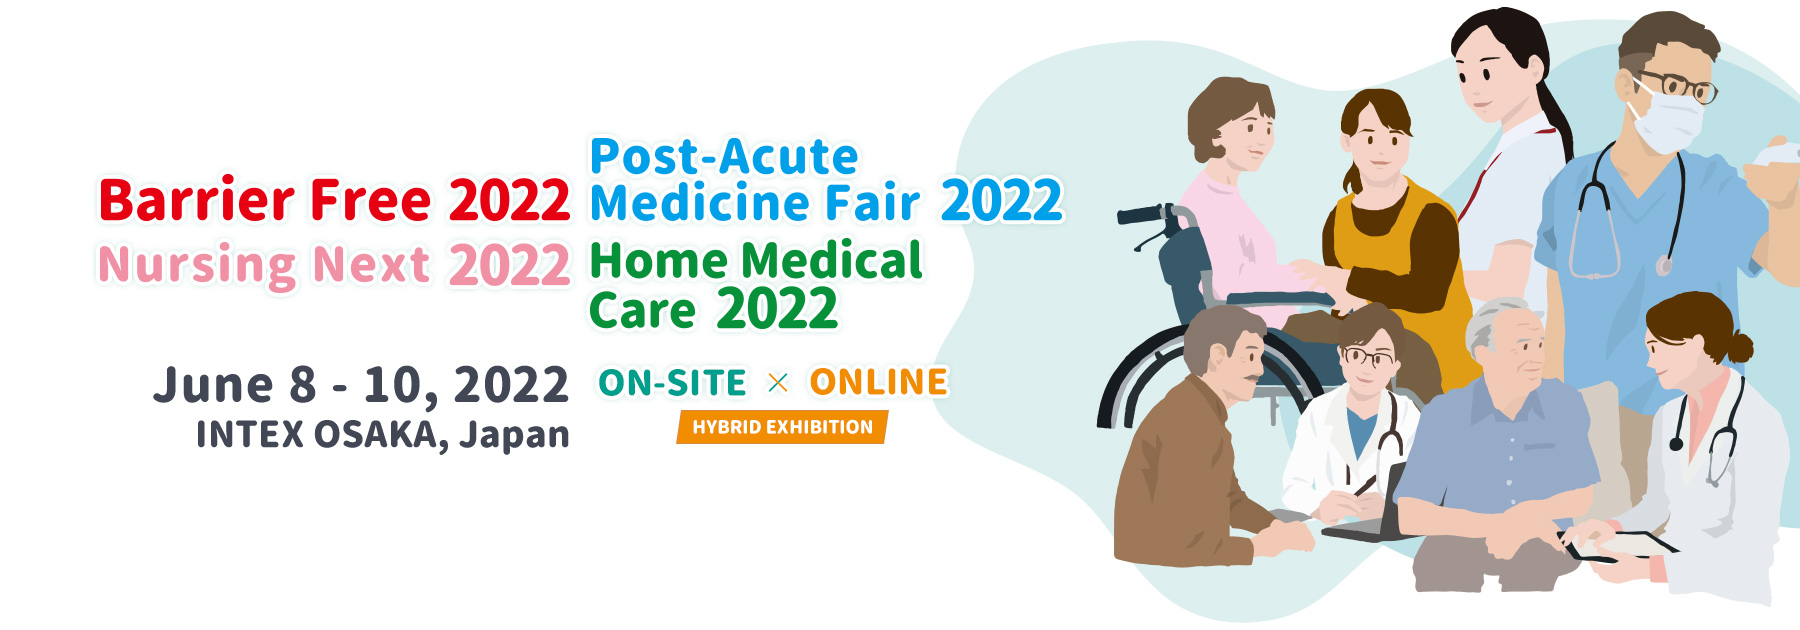 Barrier Free 2022/Post-Acute Medicine Fair 2022/Nursing Next 2022/Home Medical Care 2022 June 8 - 10 2022 INTEX OSAKA, JAPAN